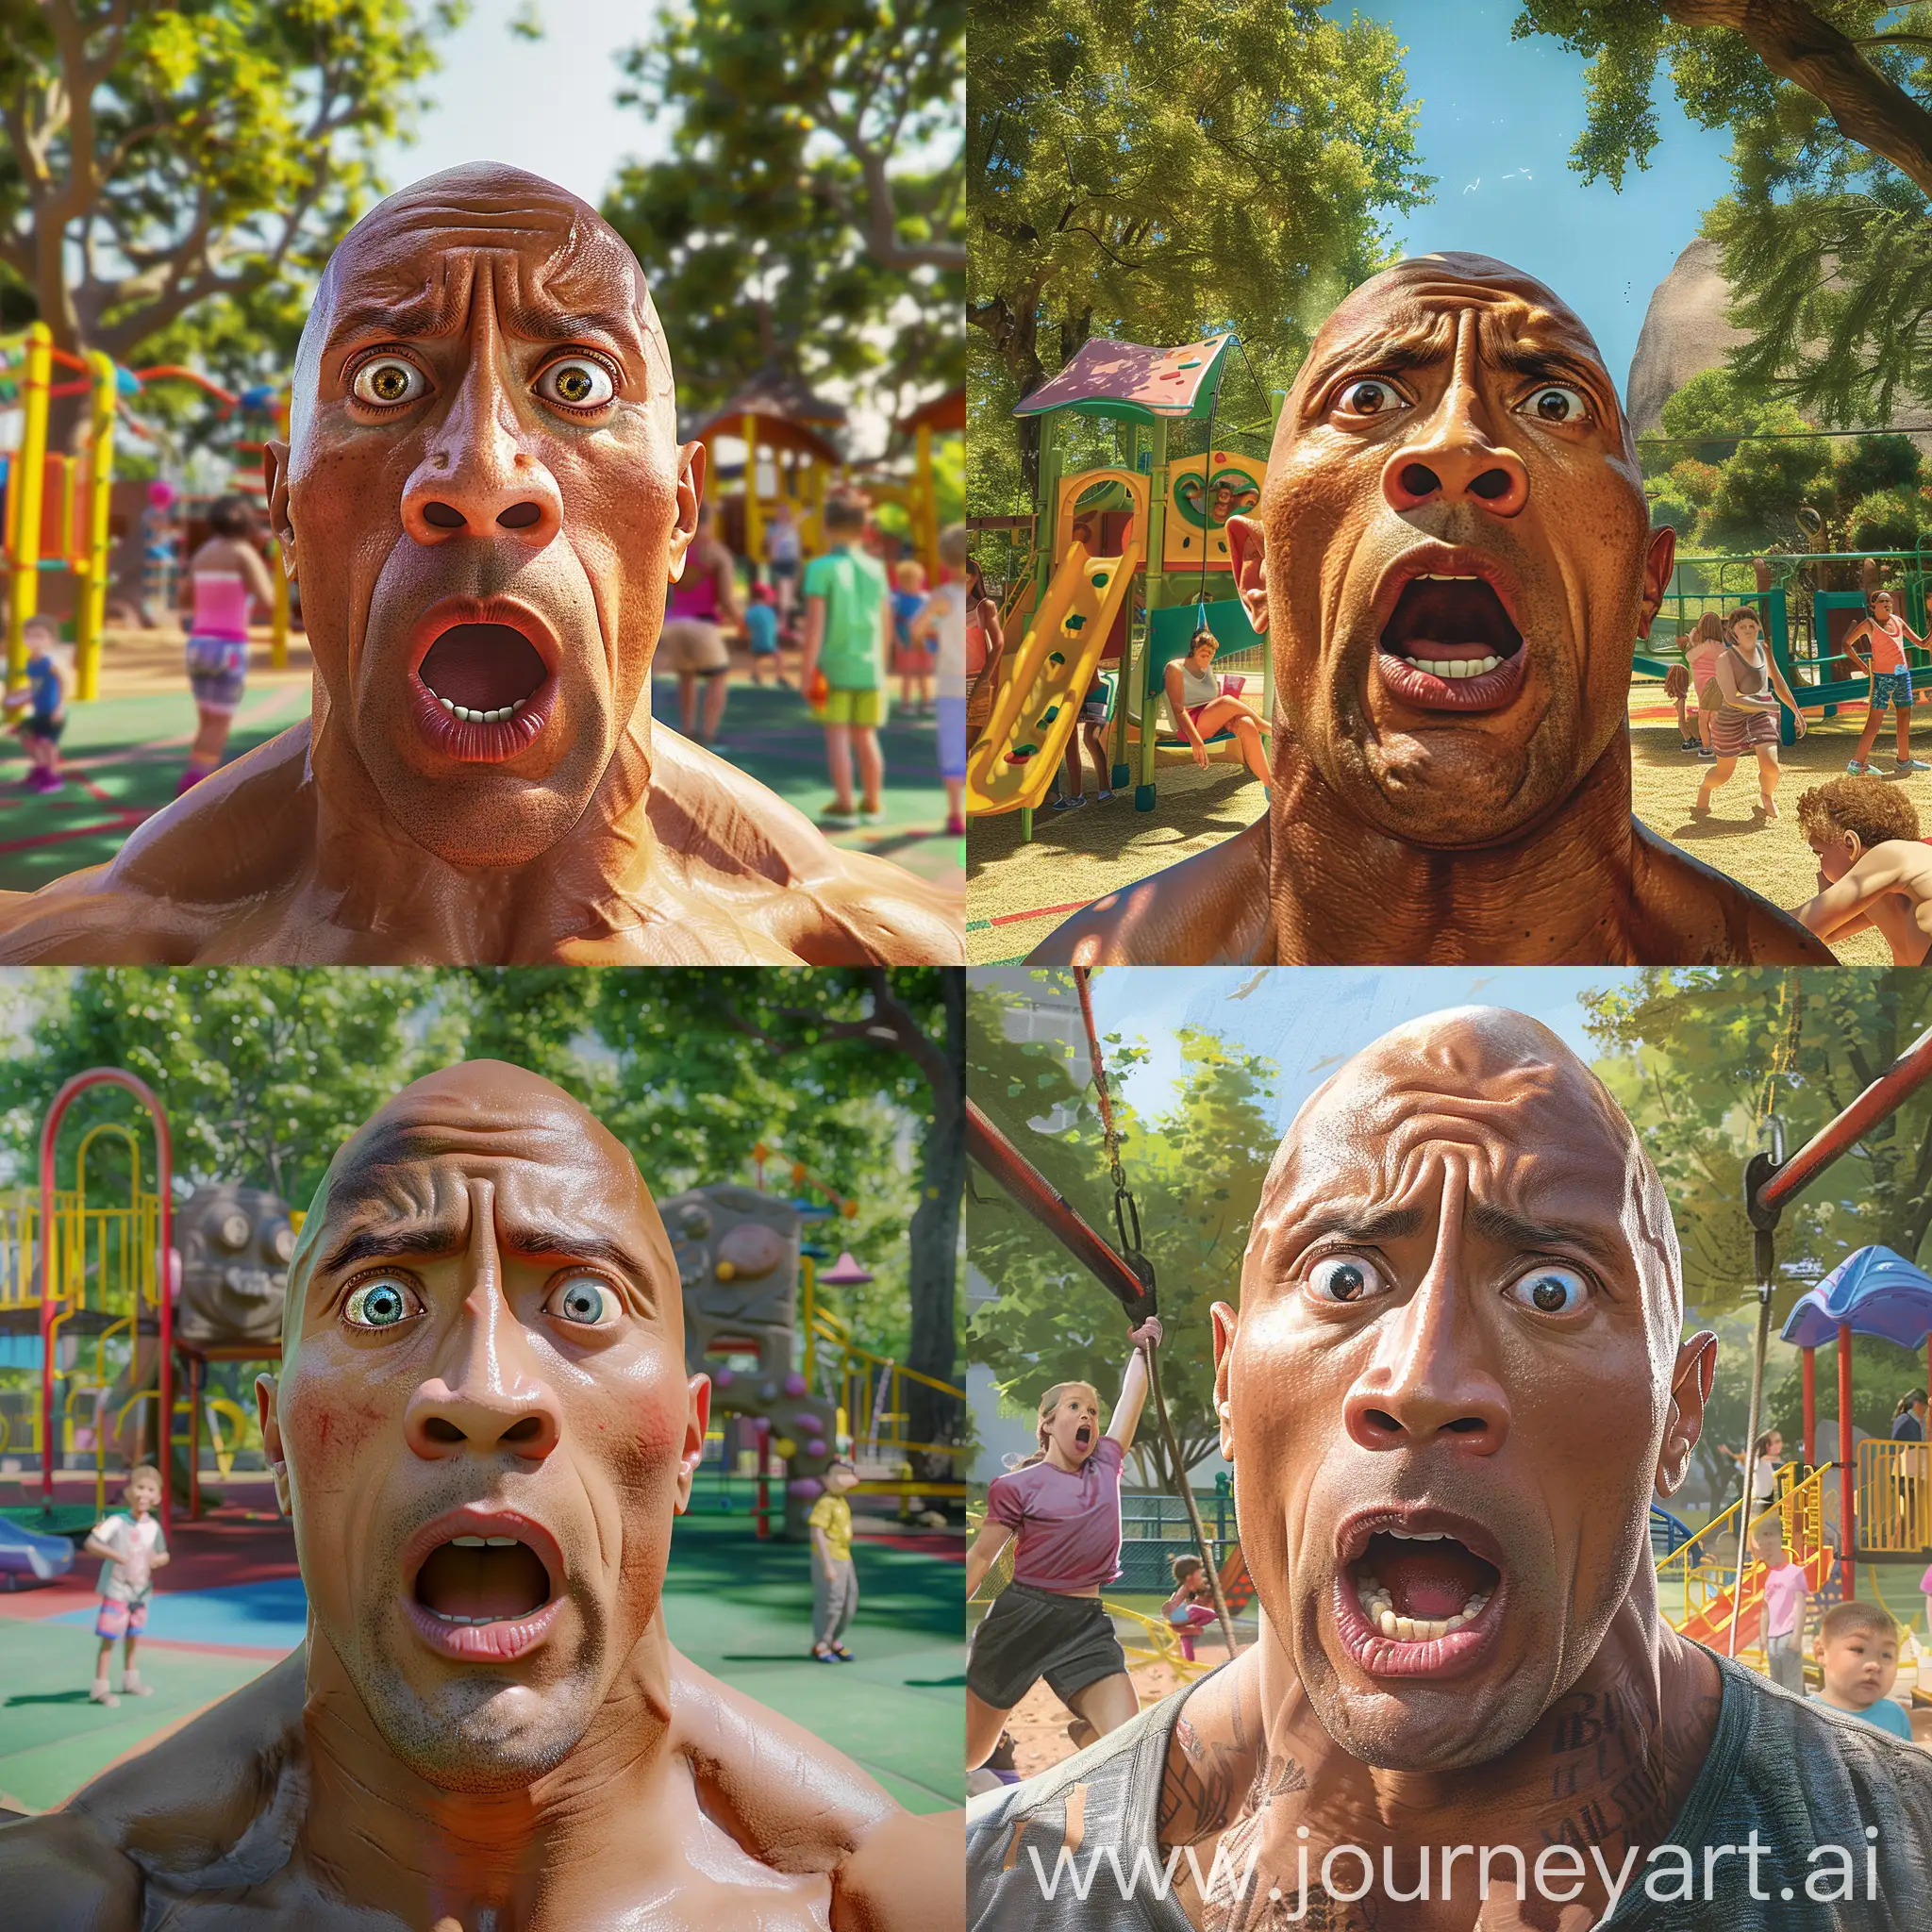 Surprised-Bald-Man-Dwayne-Johnson-in-Playground-Scene-with-Children-Playing